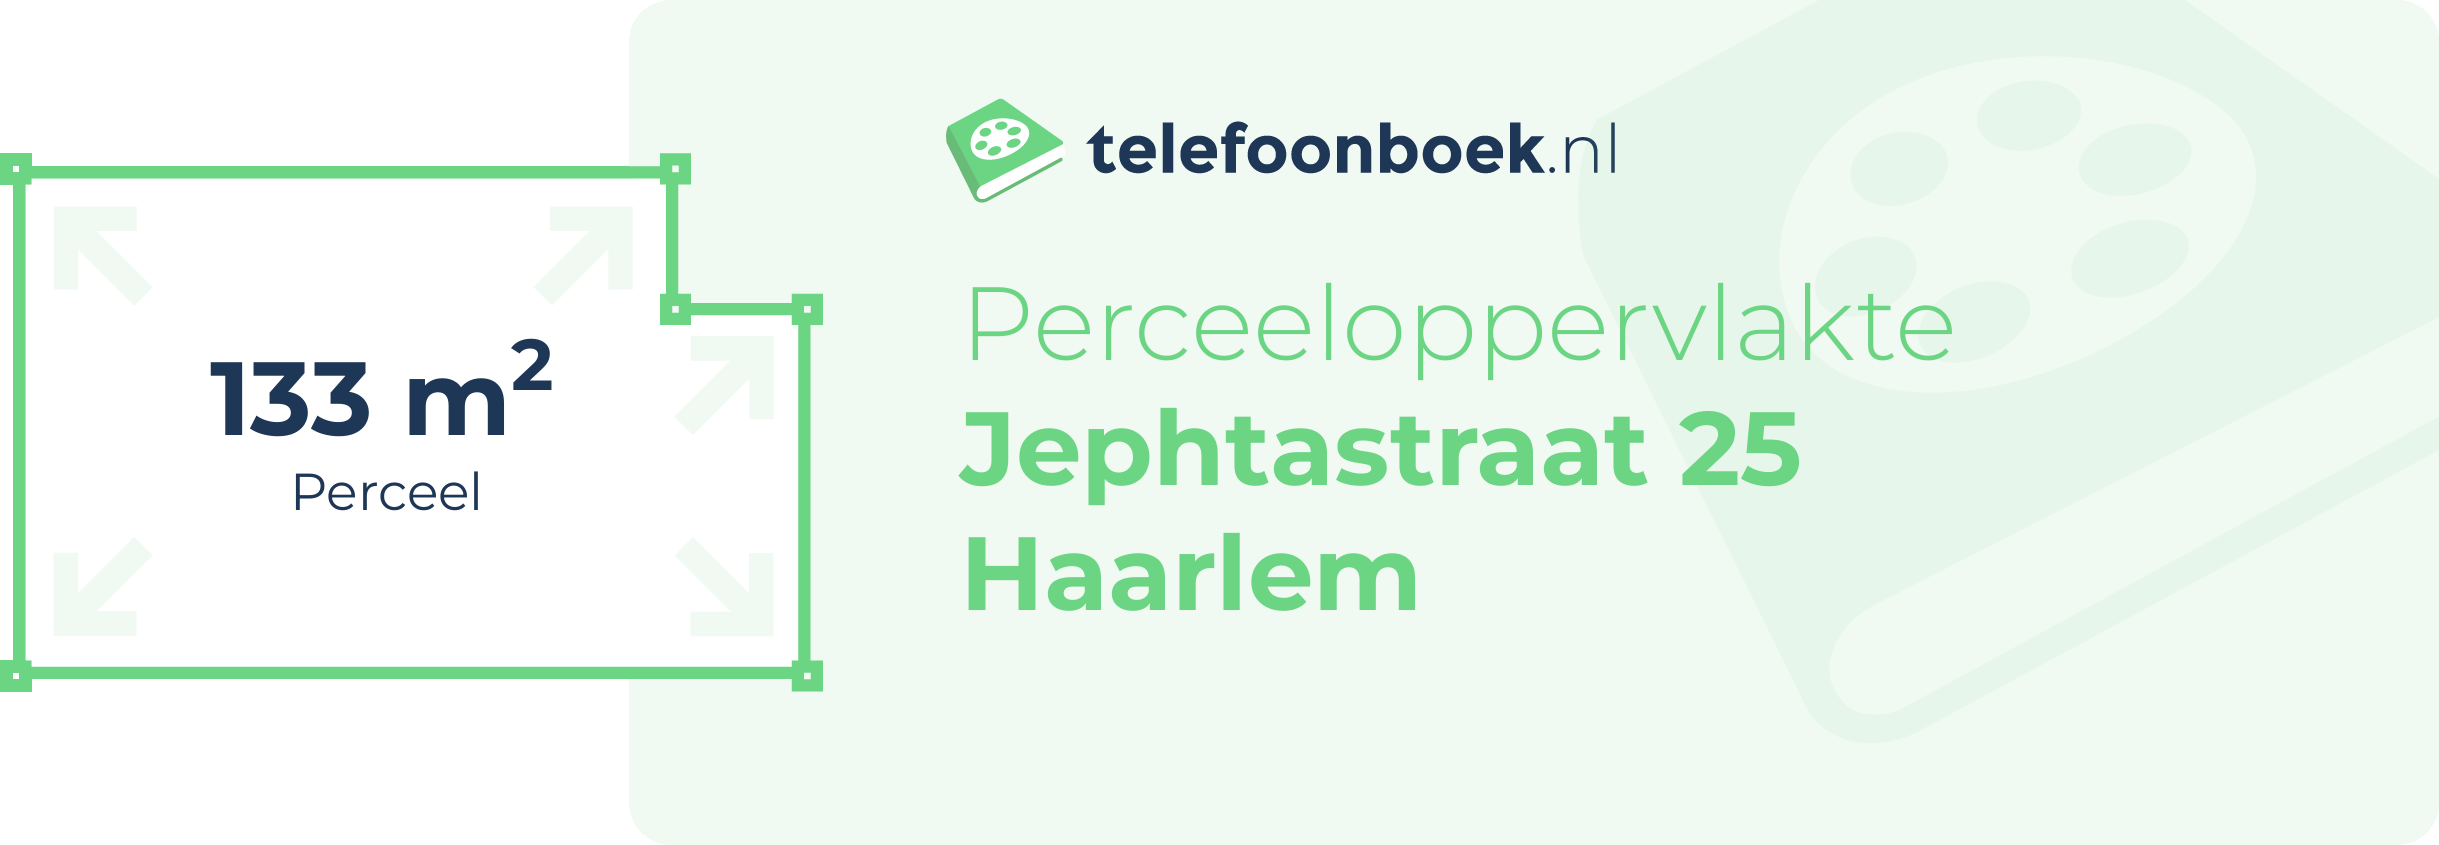 Perceeloppervlakte Jephtastraat 25 Haarlem